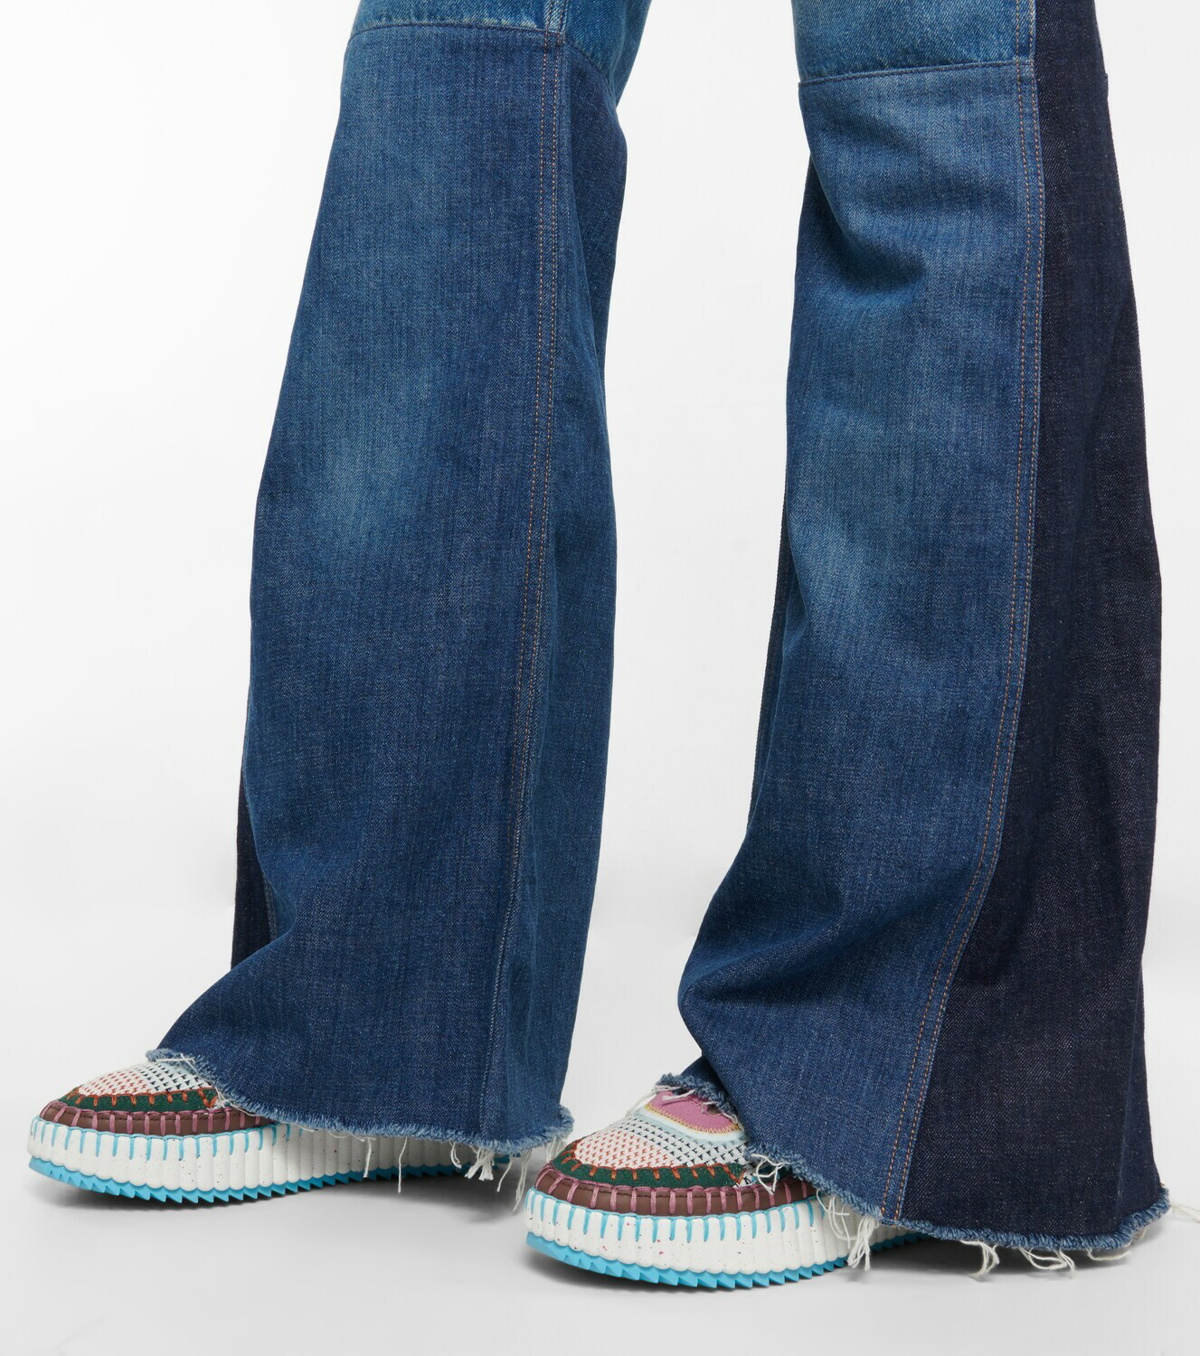 Chloe Nama Stitch Grip Walking Sneakers in Horizon Blue Size 36